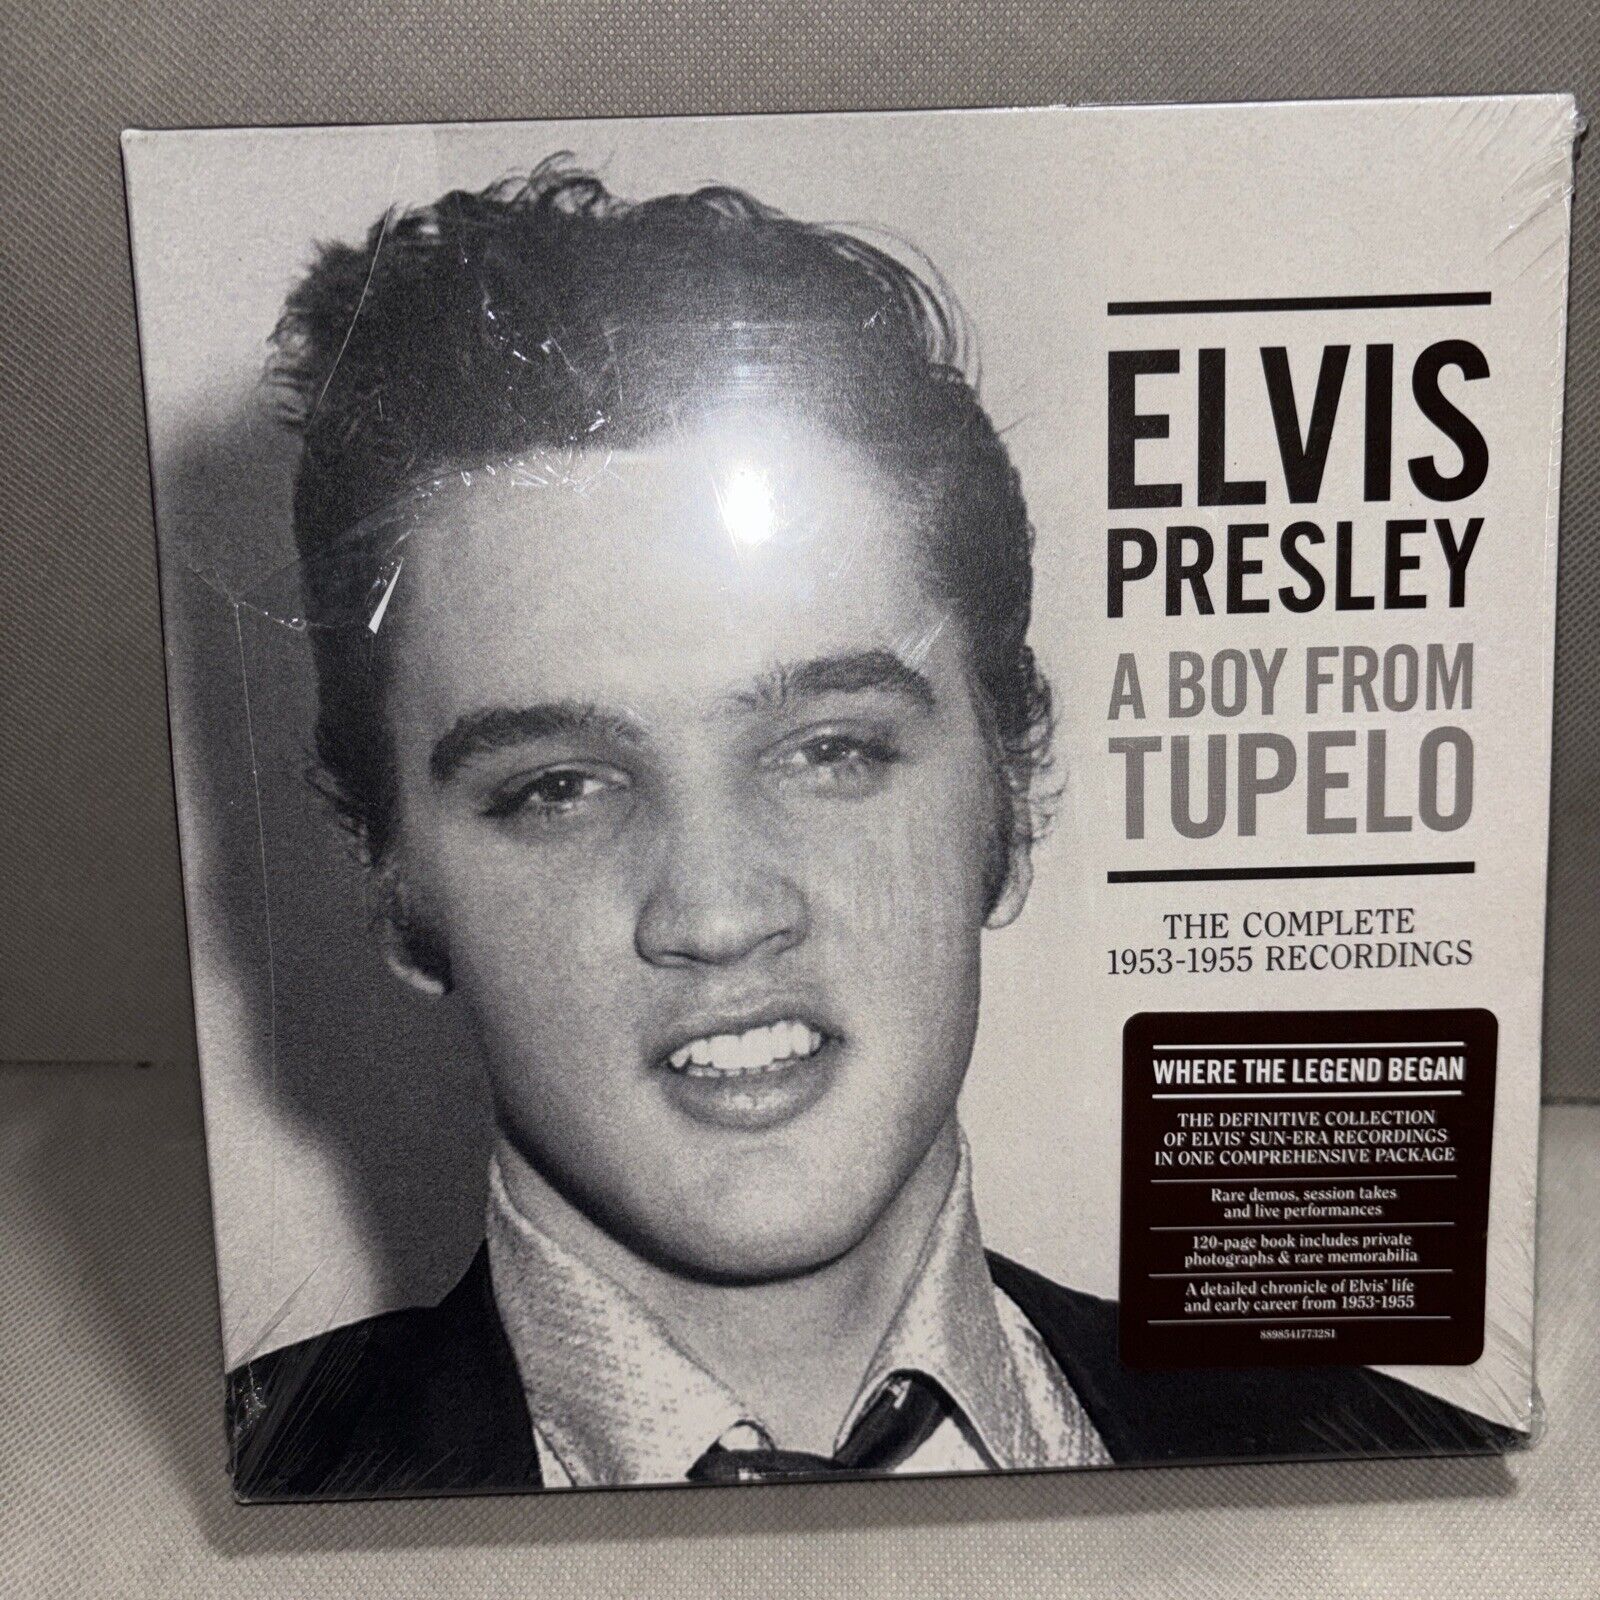 ELVIS PRESLEY A BOY FROM TUPELO COMPLETE 1953-55 RECORDINGS 3 CDs Sealed Wear